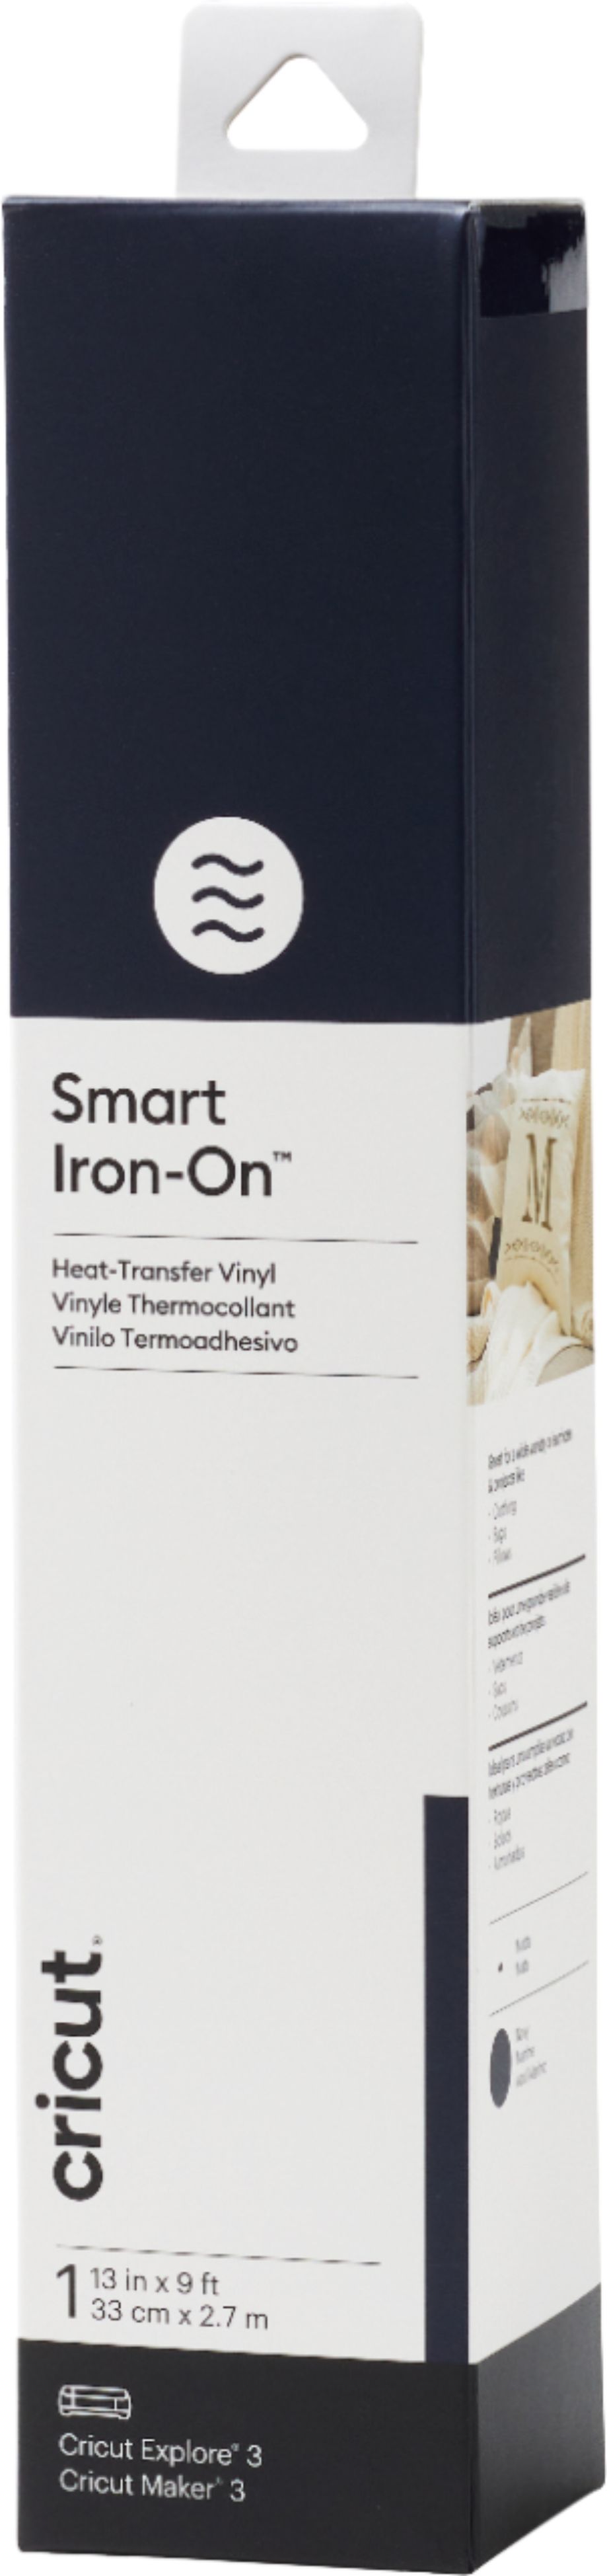 Cricut Smart Iron-On 9 ft 2008491 - Best Buy